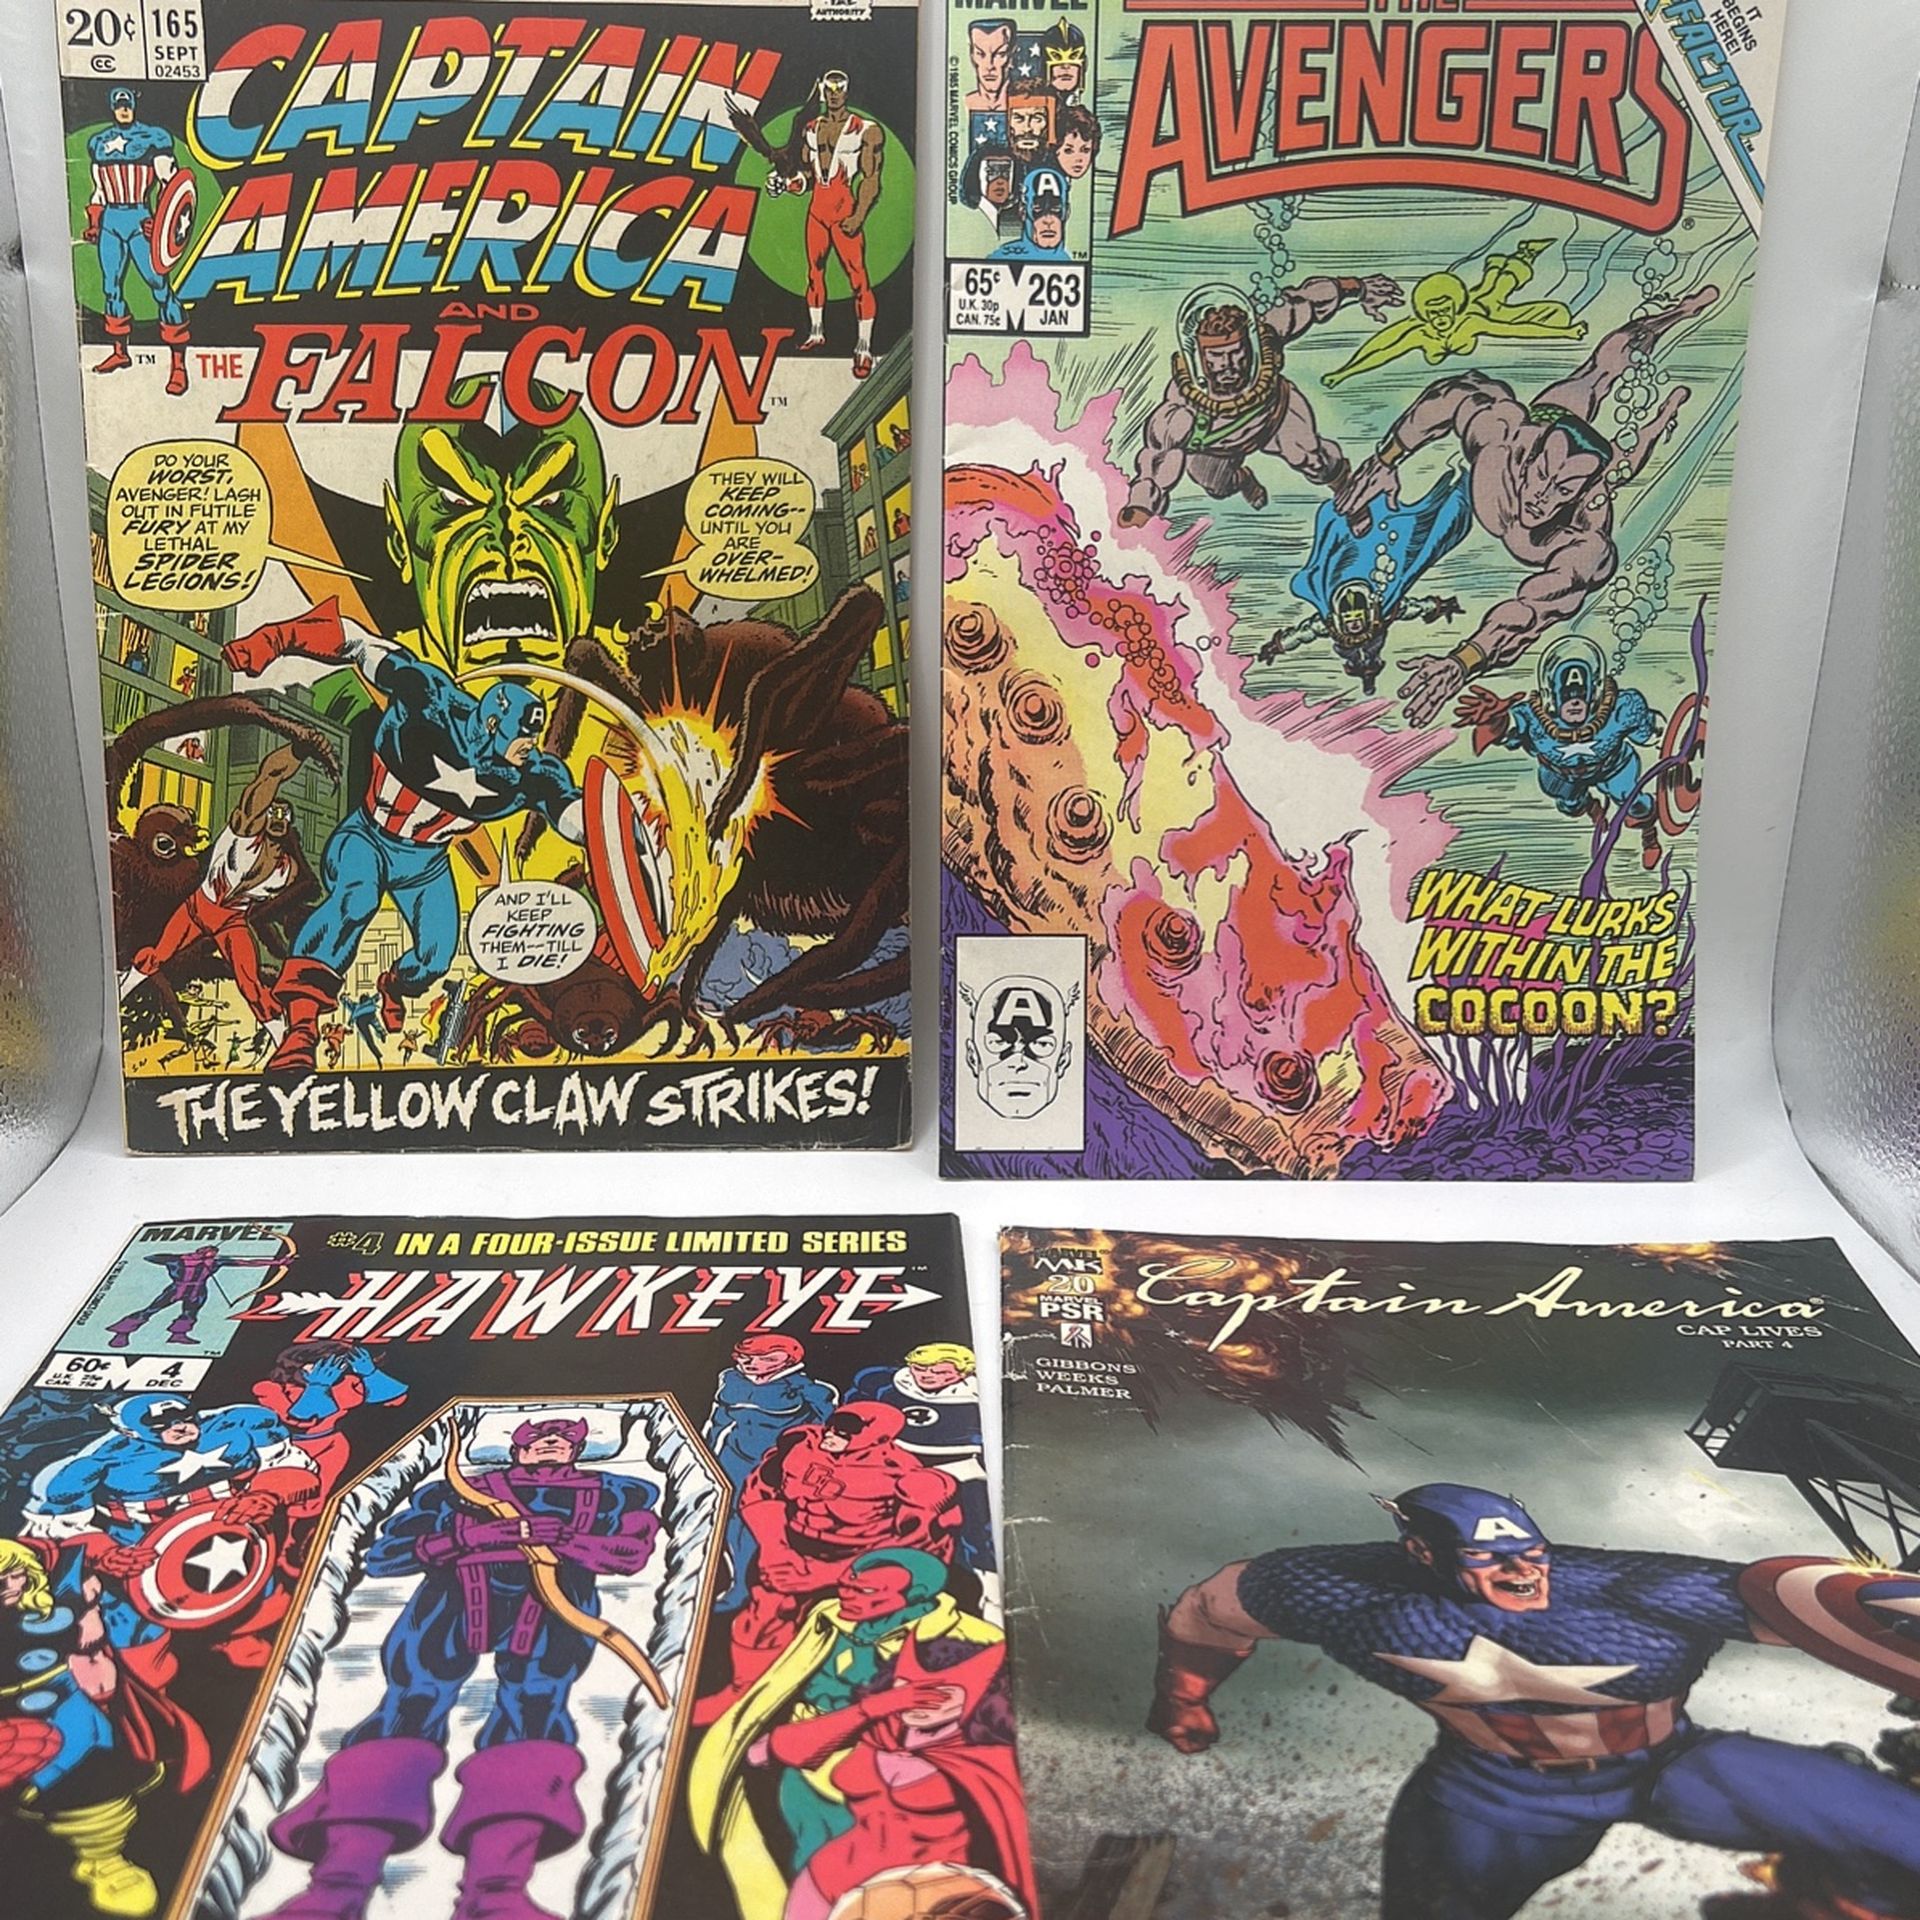 Lot Of Comics / Captain America/ Iron Man / Hawkeye/Spiderman/ 13 Comics / Open To Offers 